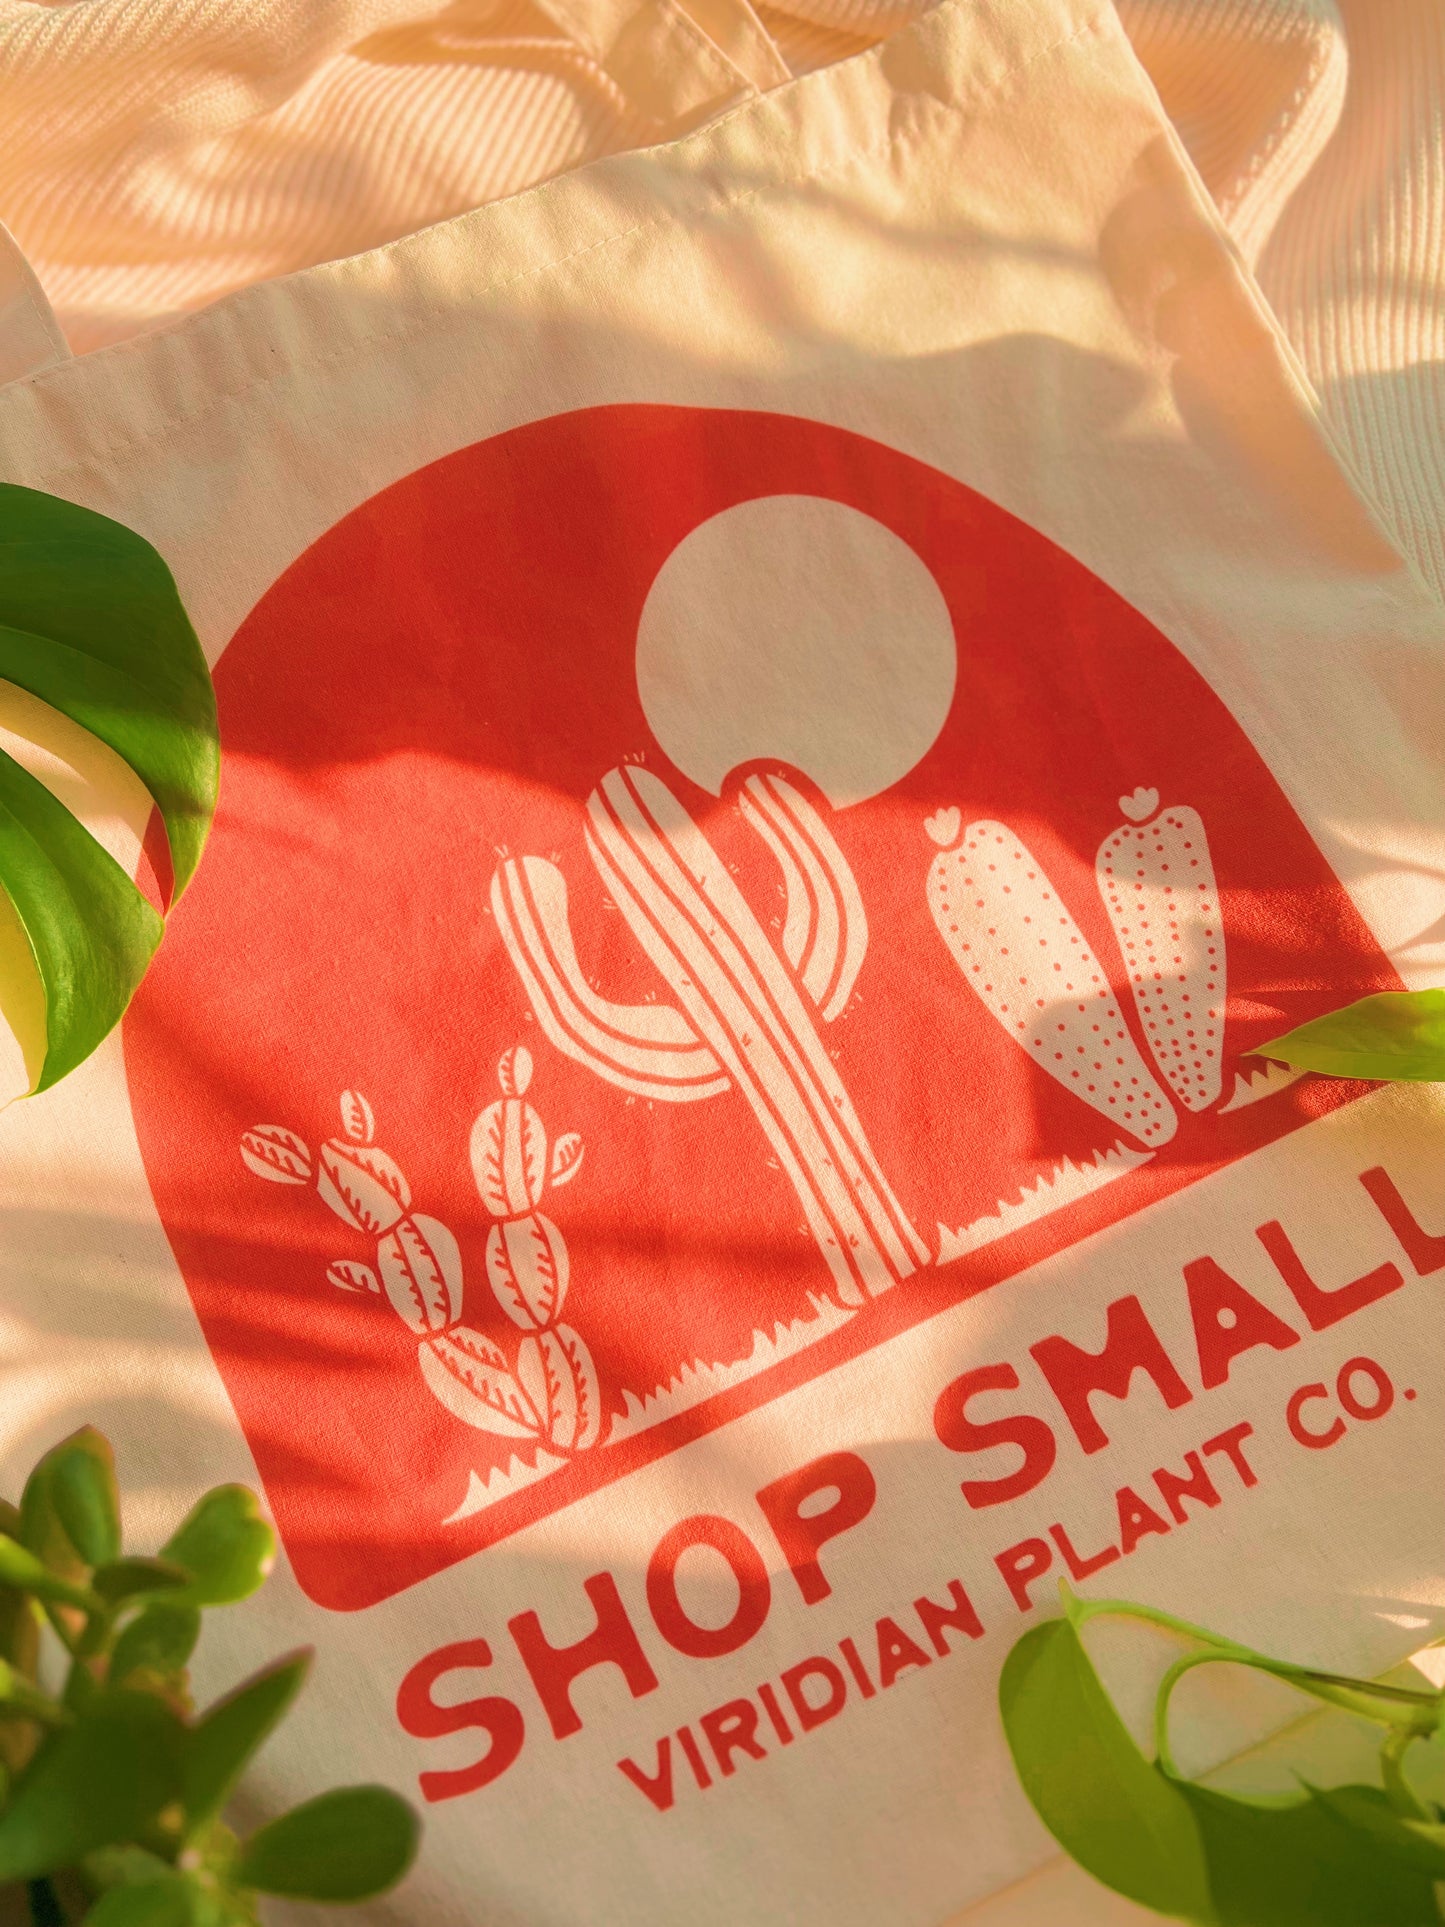 "Shop Small" Landscape Tote Bag